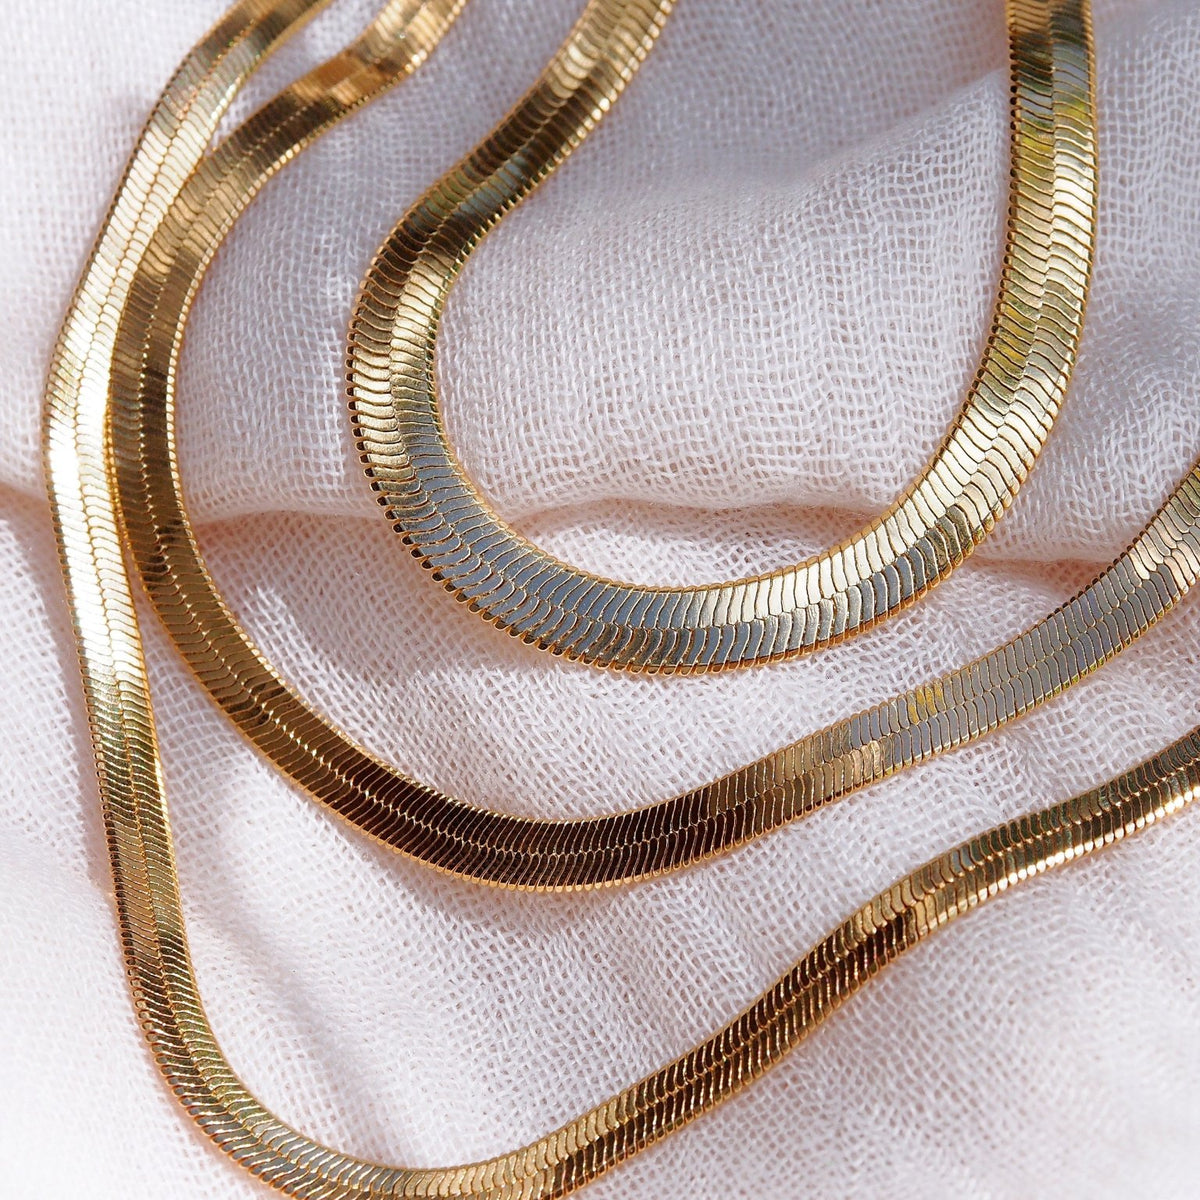 Ladies' 6.0mm Herringbone Chain Necklace in 14K Gold - 20